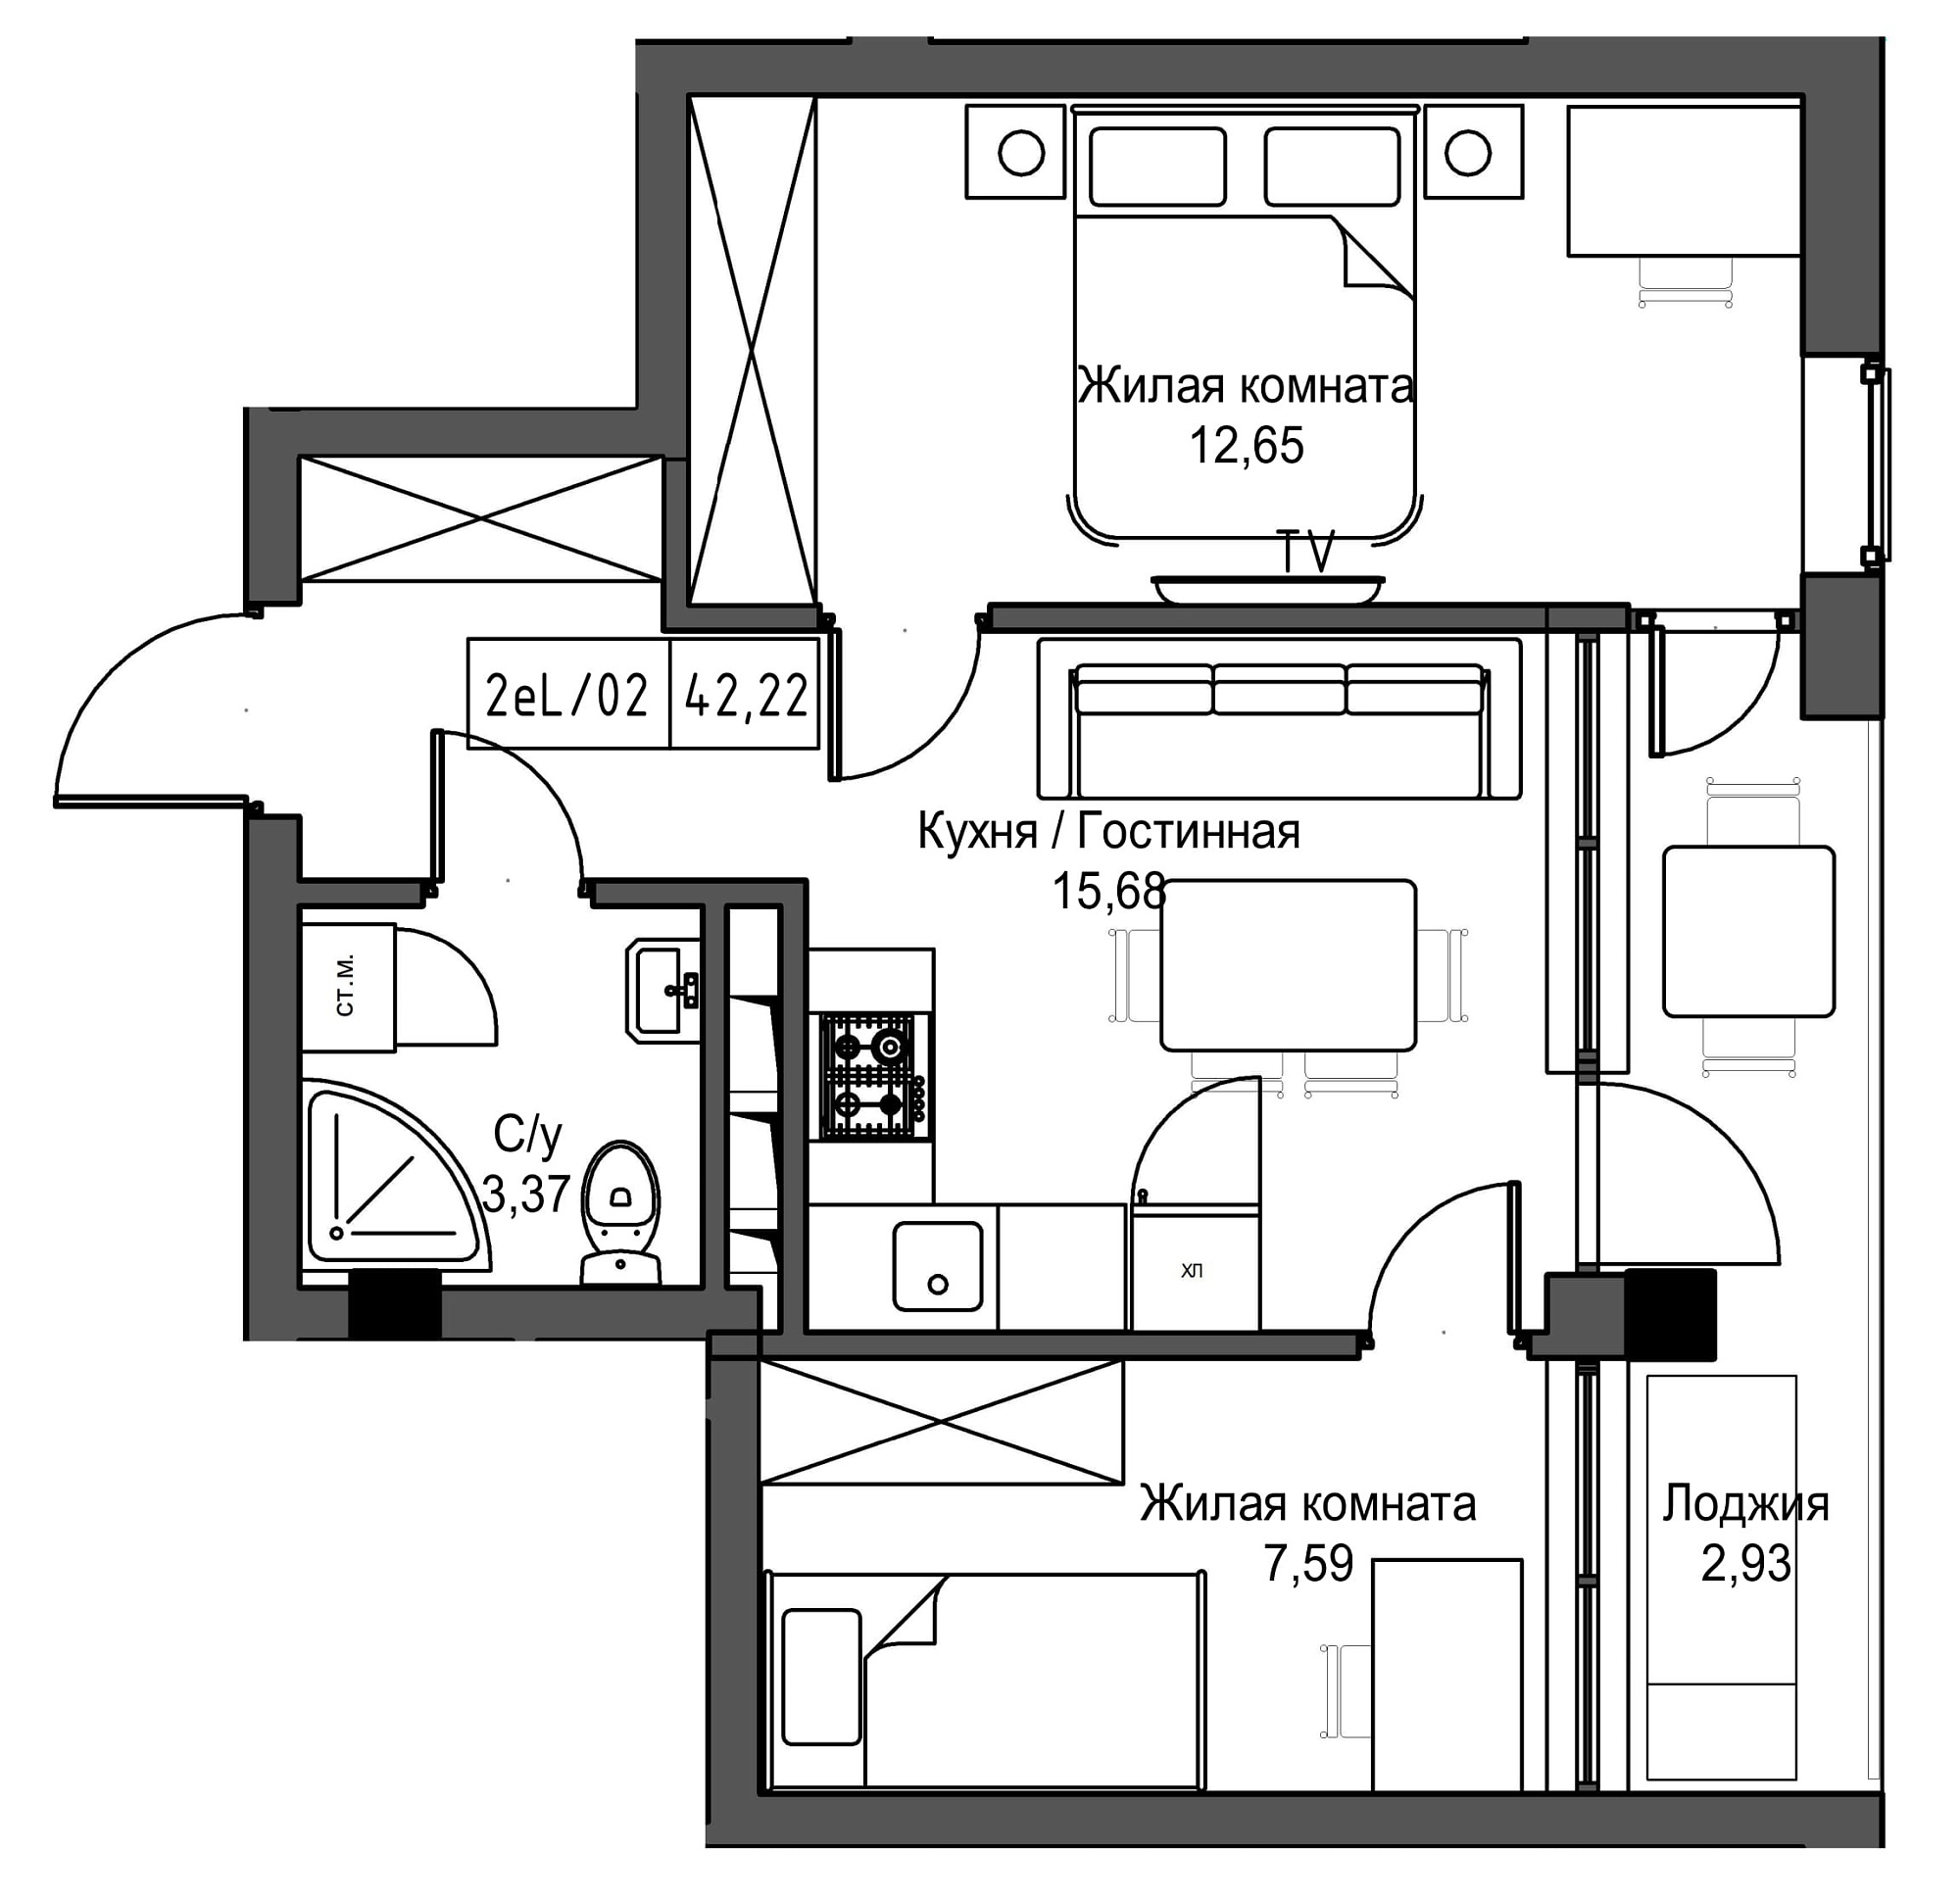 Планування 2-к квартира площею 42.22м2, UM-002-09/0082.